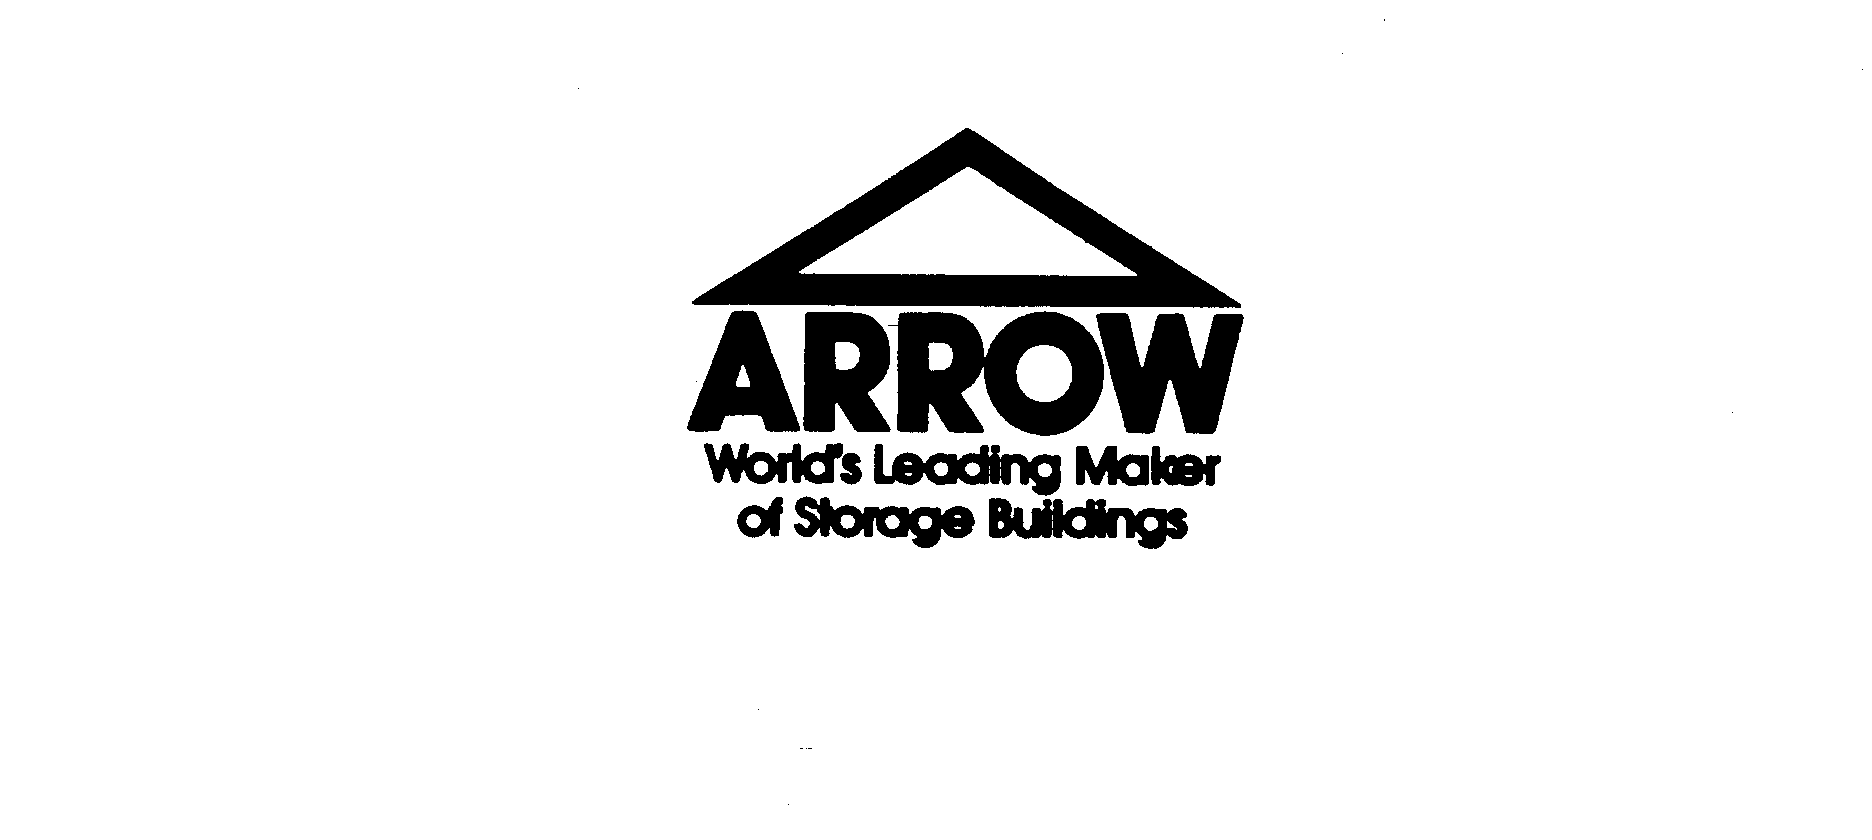  ARROW WORLD'S LEADING MAKER OF STORAGE BUILDINGS